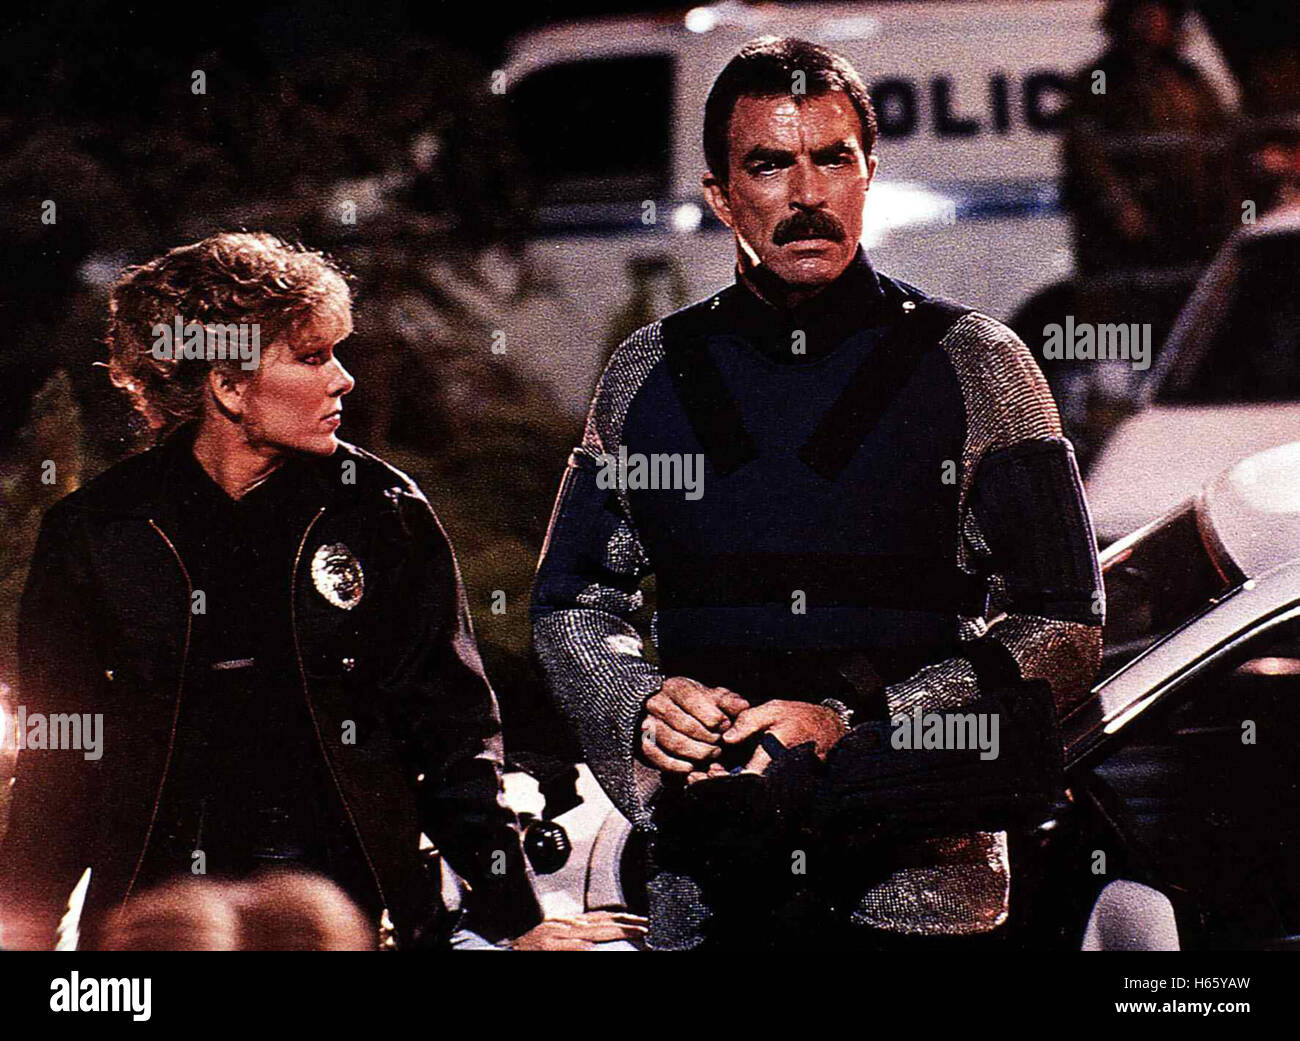 Runaway - Spinnen des Todes, USA 1984, Director: Michael Crichton,  Actors/Stars: Tom Selleck, Cynthia Rhodes, Gene Simmons Stock Photo - Alamy